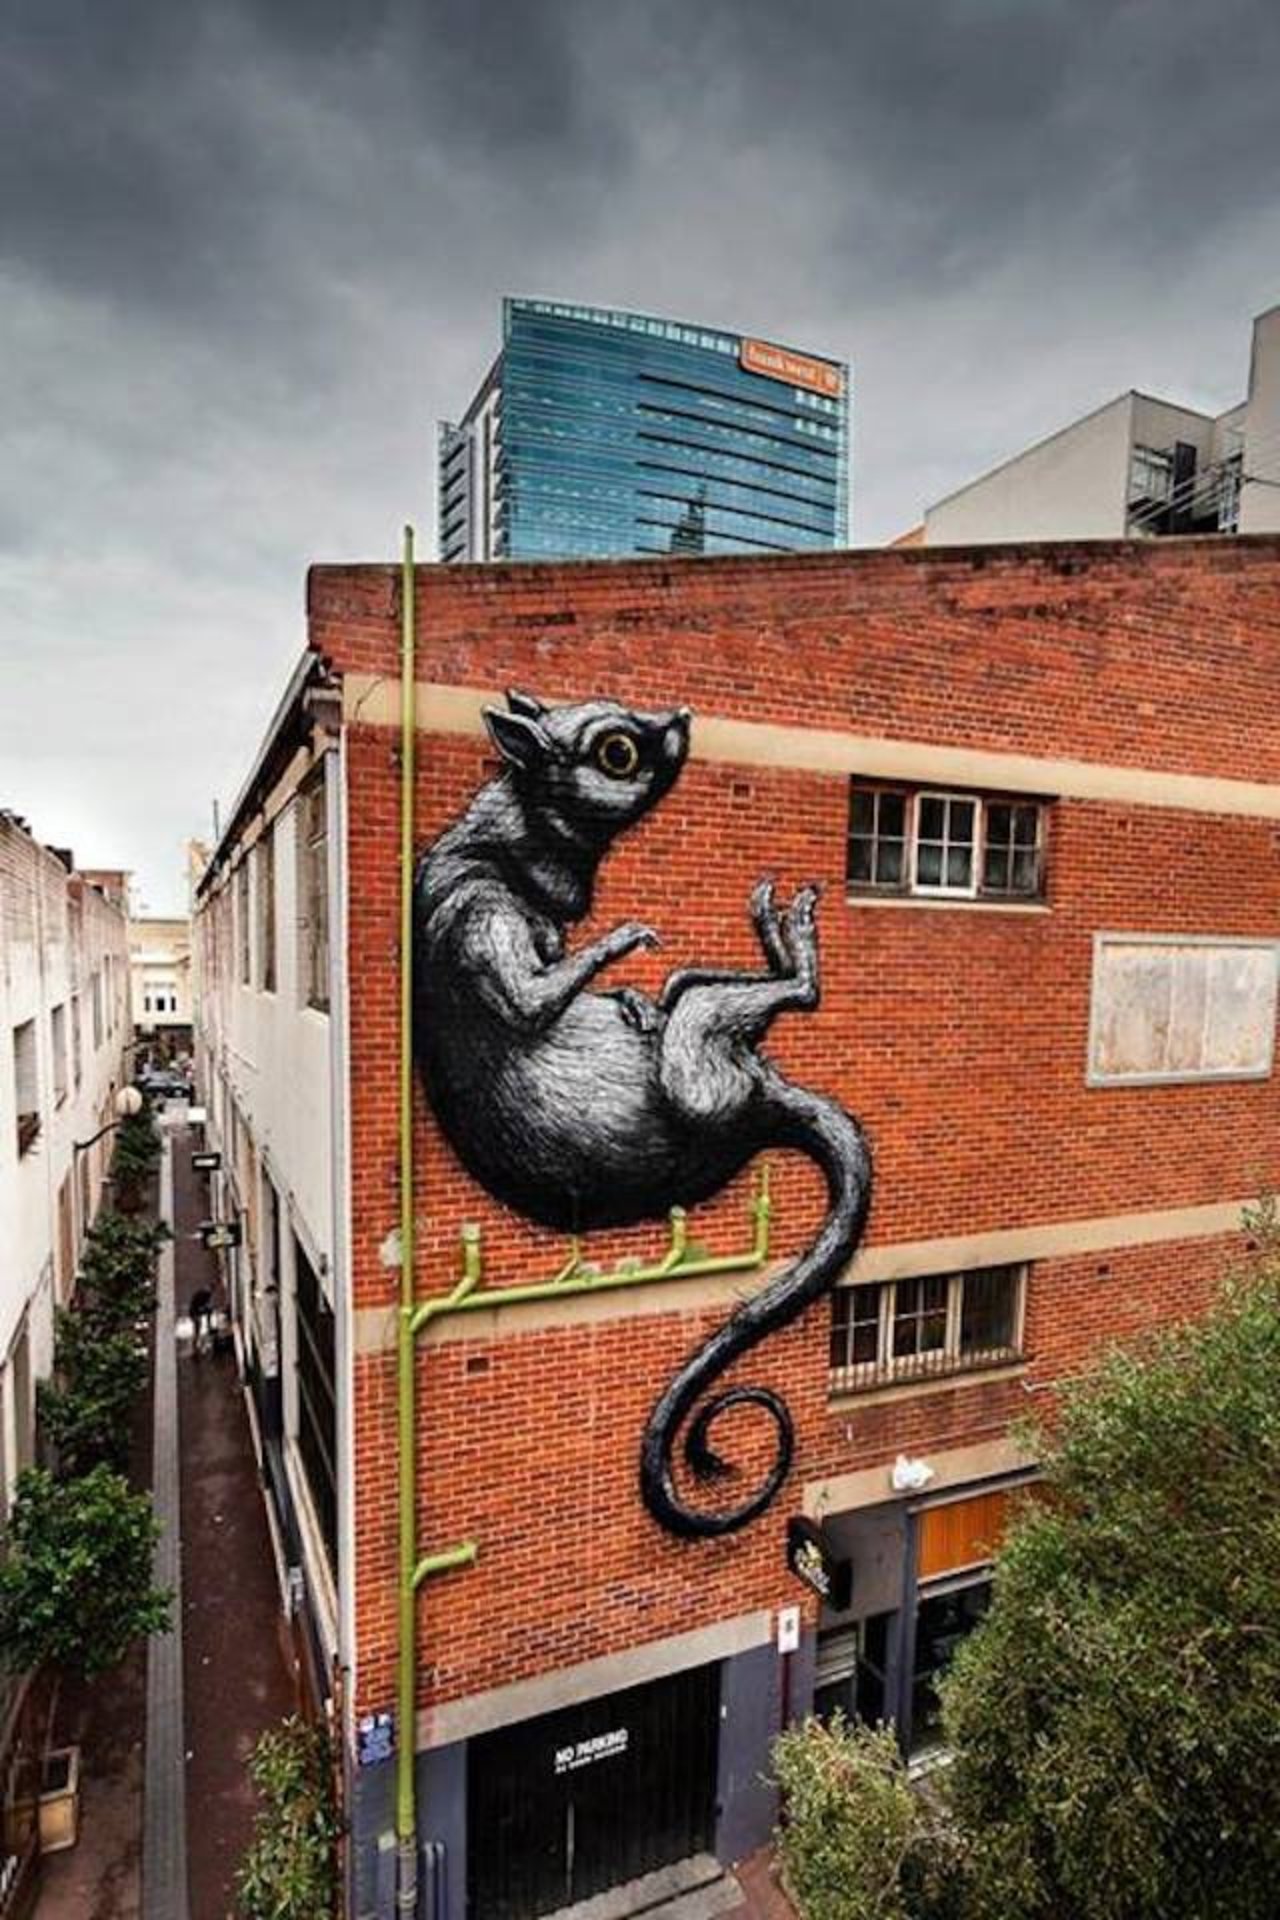 #Mural by ROA #Perth #Australia #Streetart #urbanart #graffiti #art https://t.co/QGWrxnEWYt